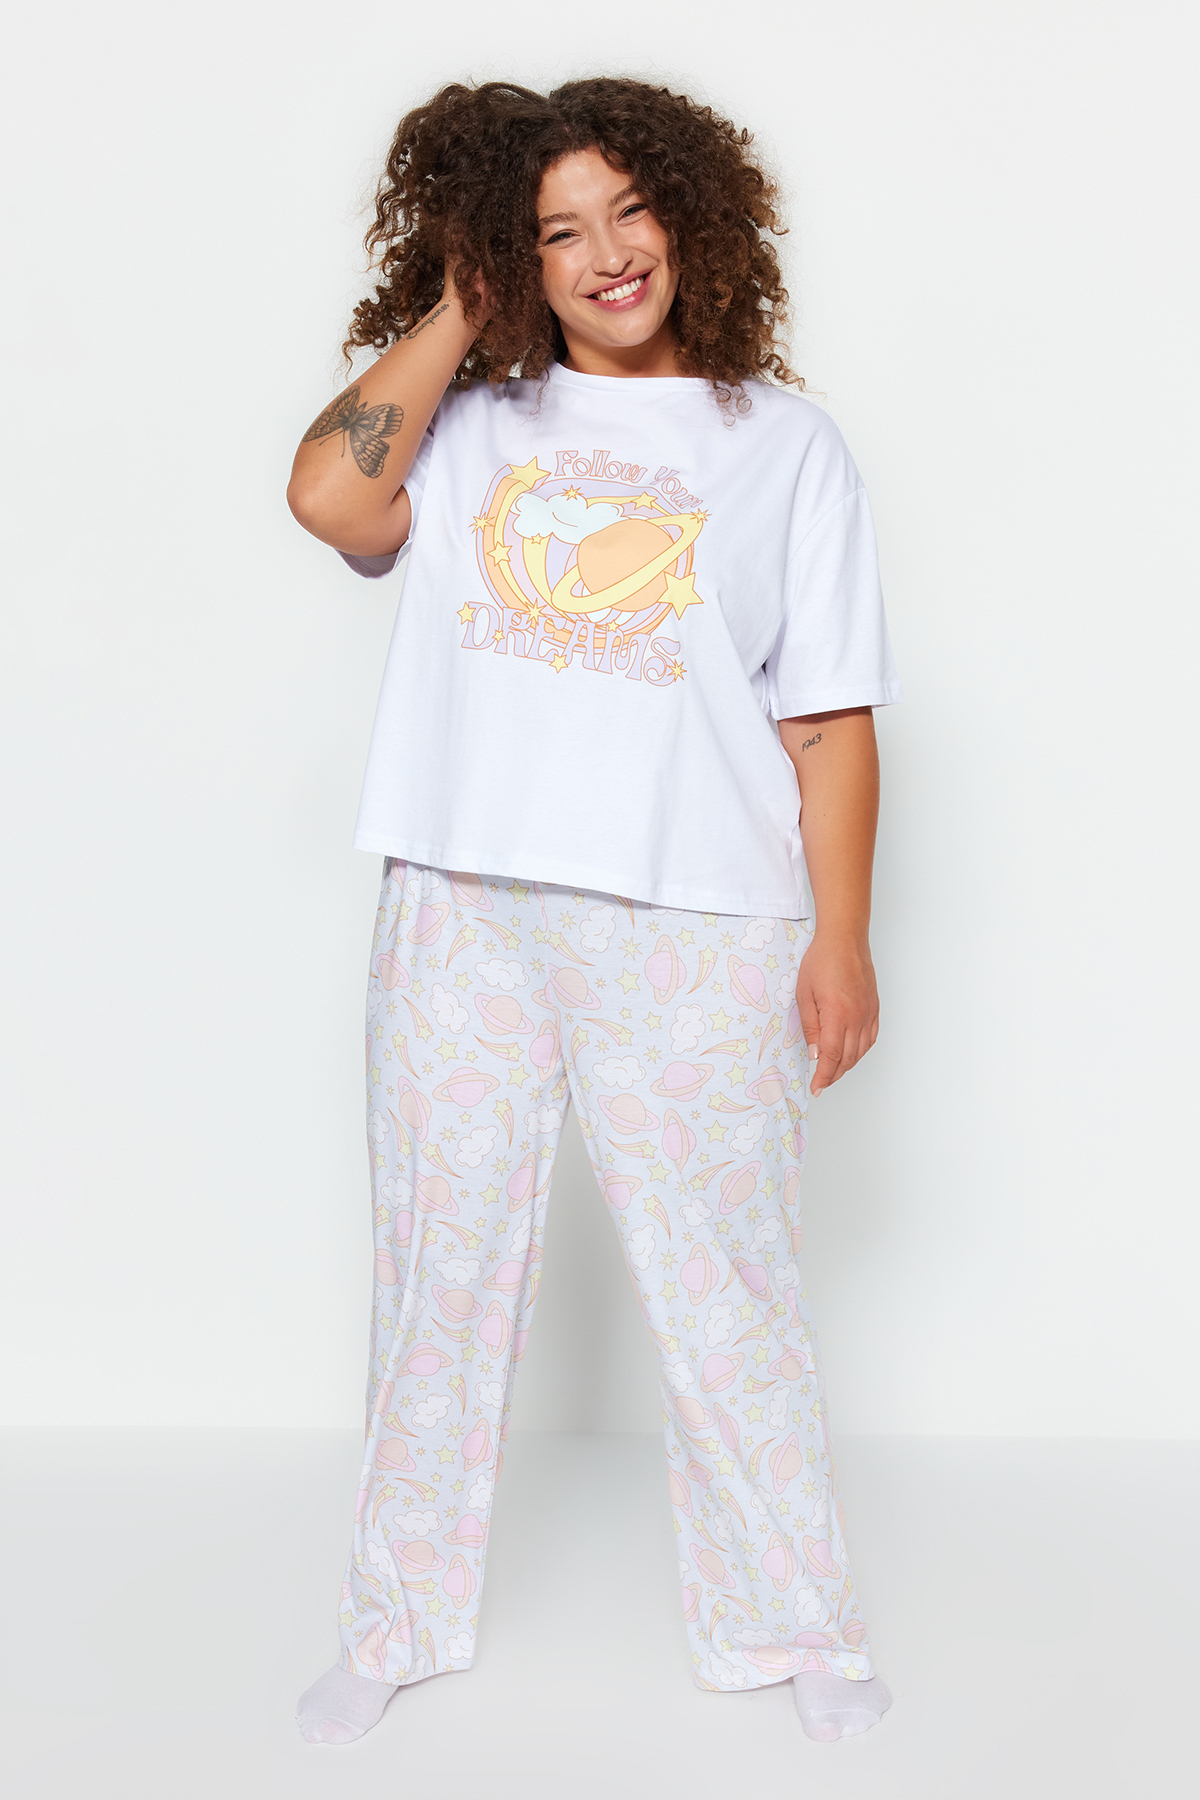 Trendyol Curve Pink Printed Knitted Pajamas Set